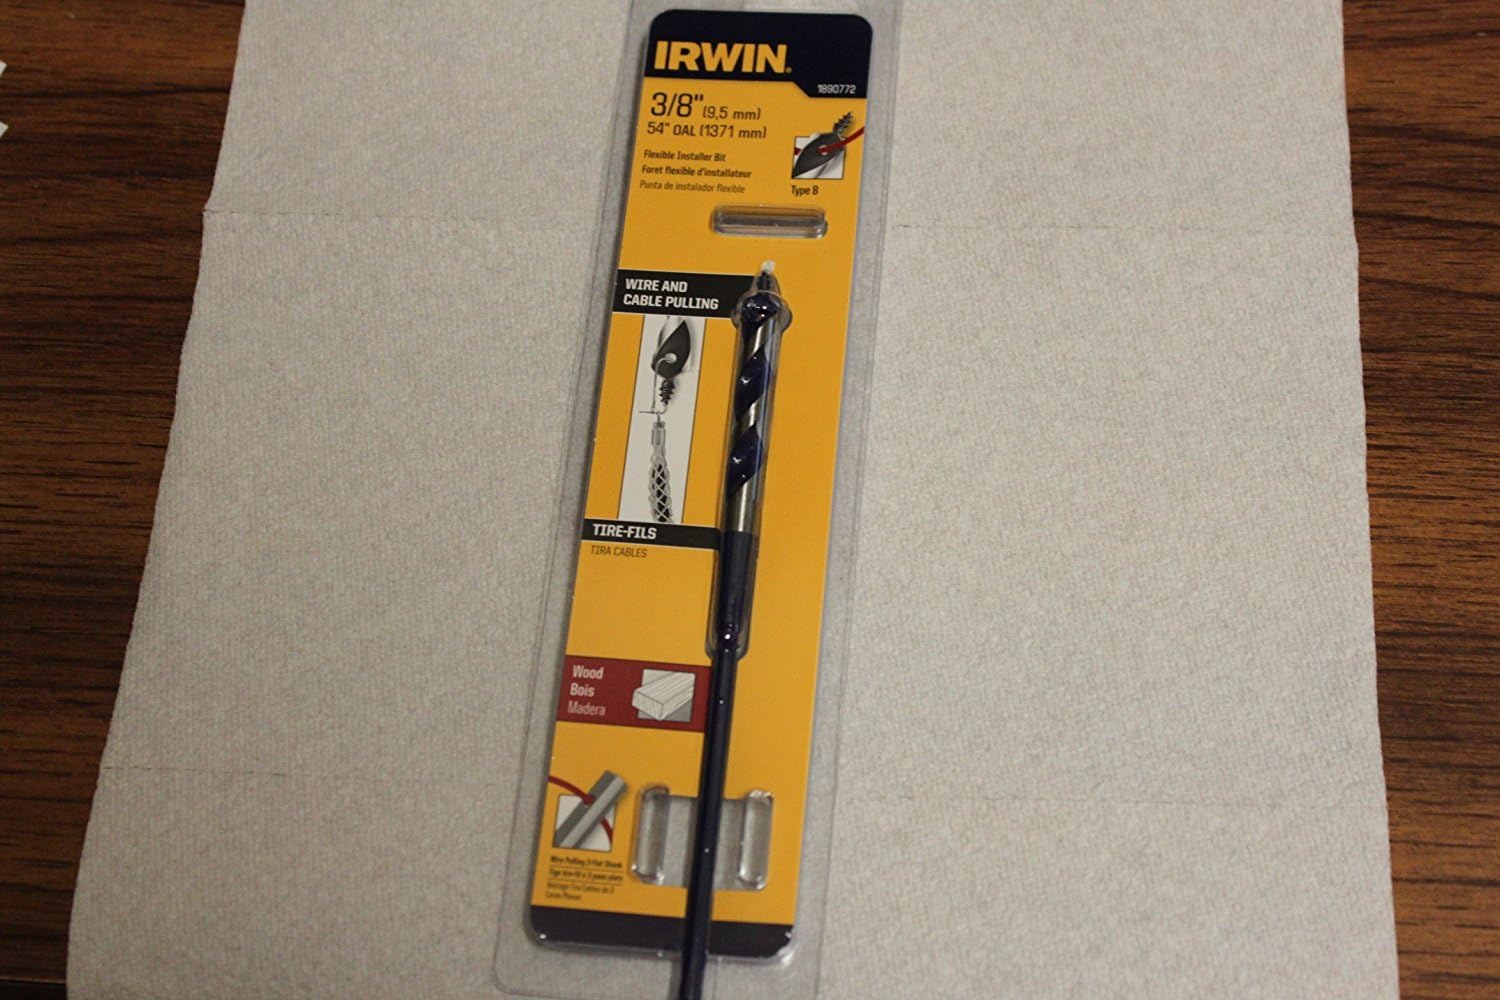 Irwin 1890772 Flexible Installer Drill Bit with Screw Tip, 3/8-Inch Shank, 54-Inch Length